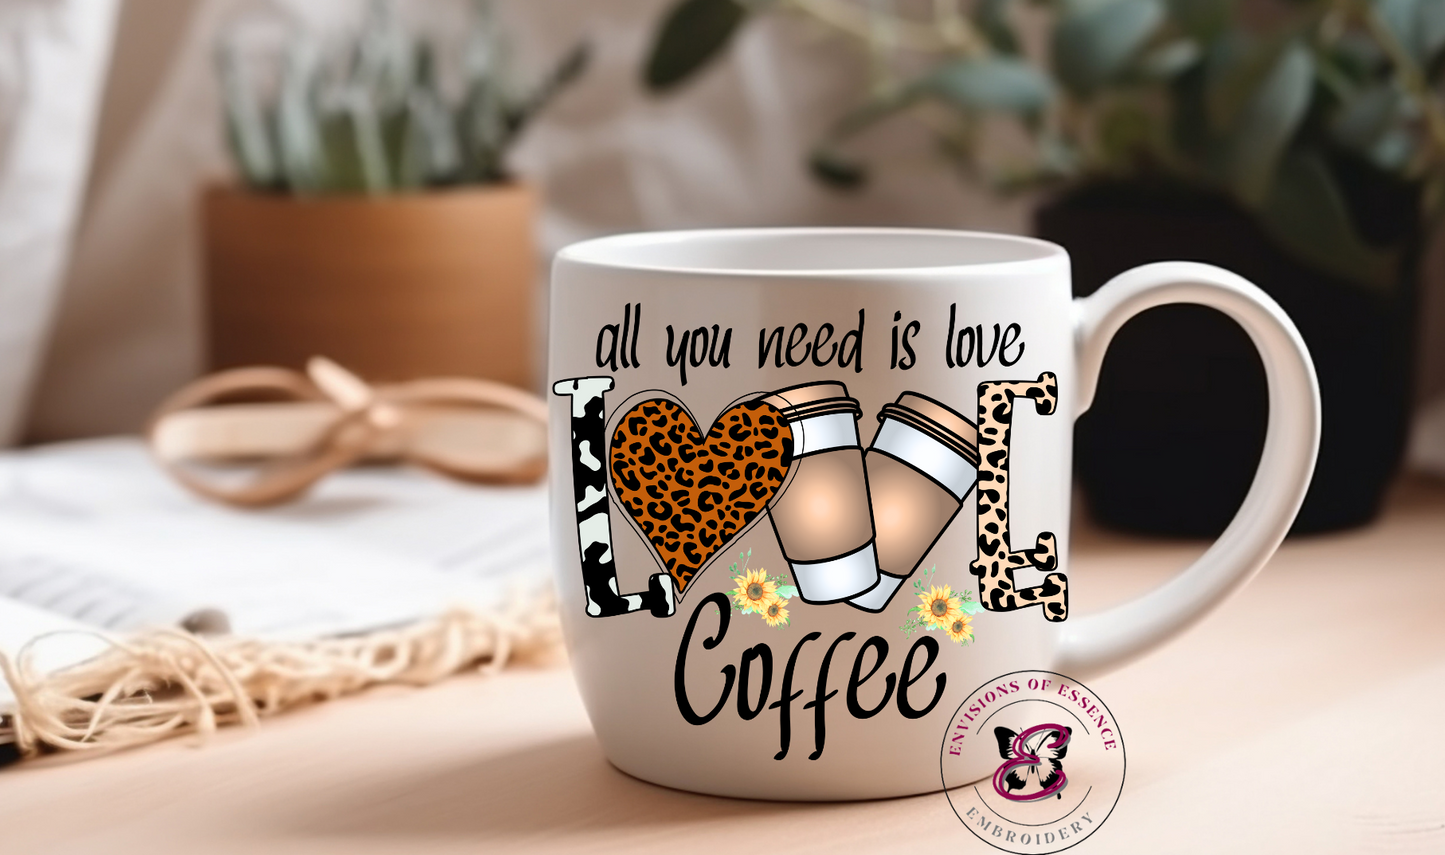 Love & Coffee Mug